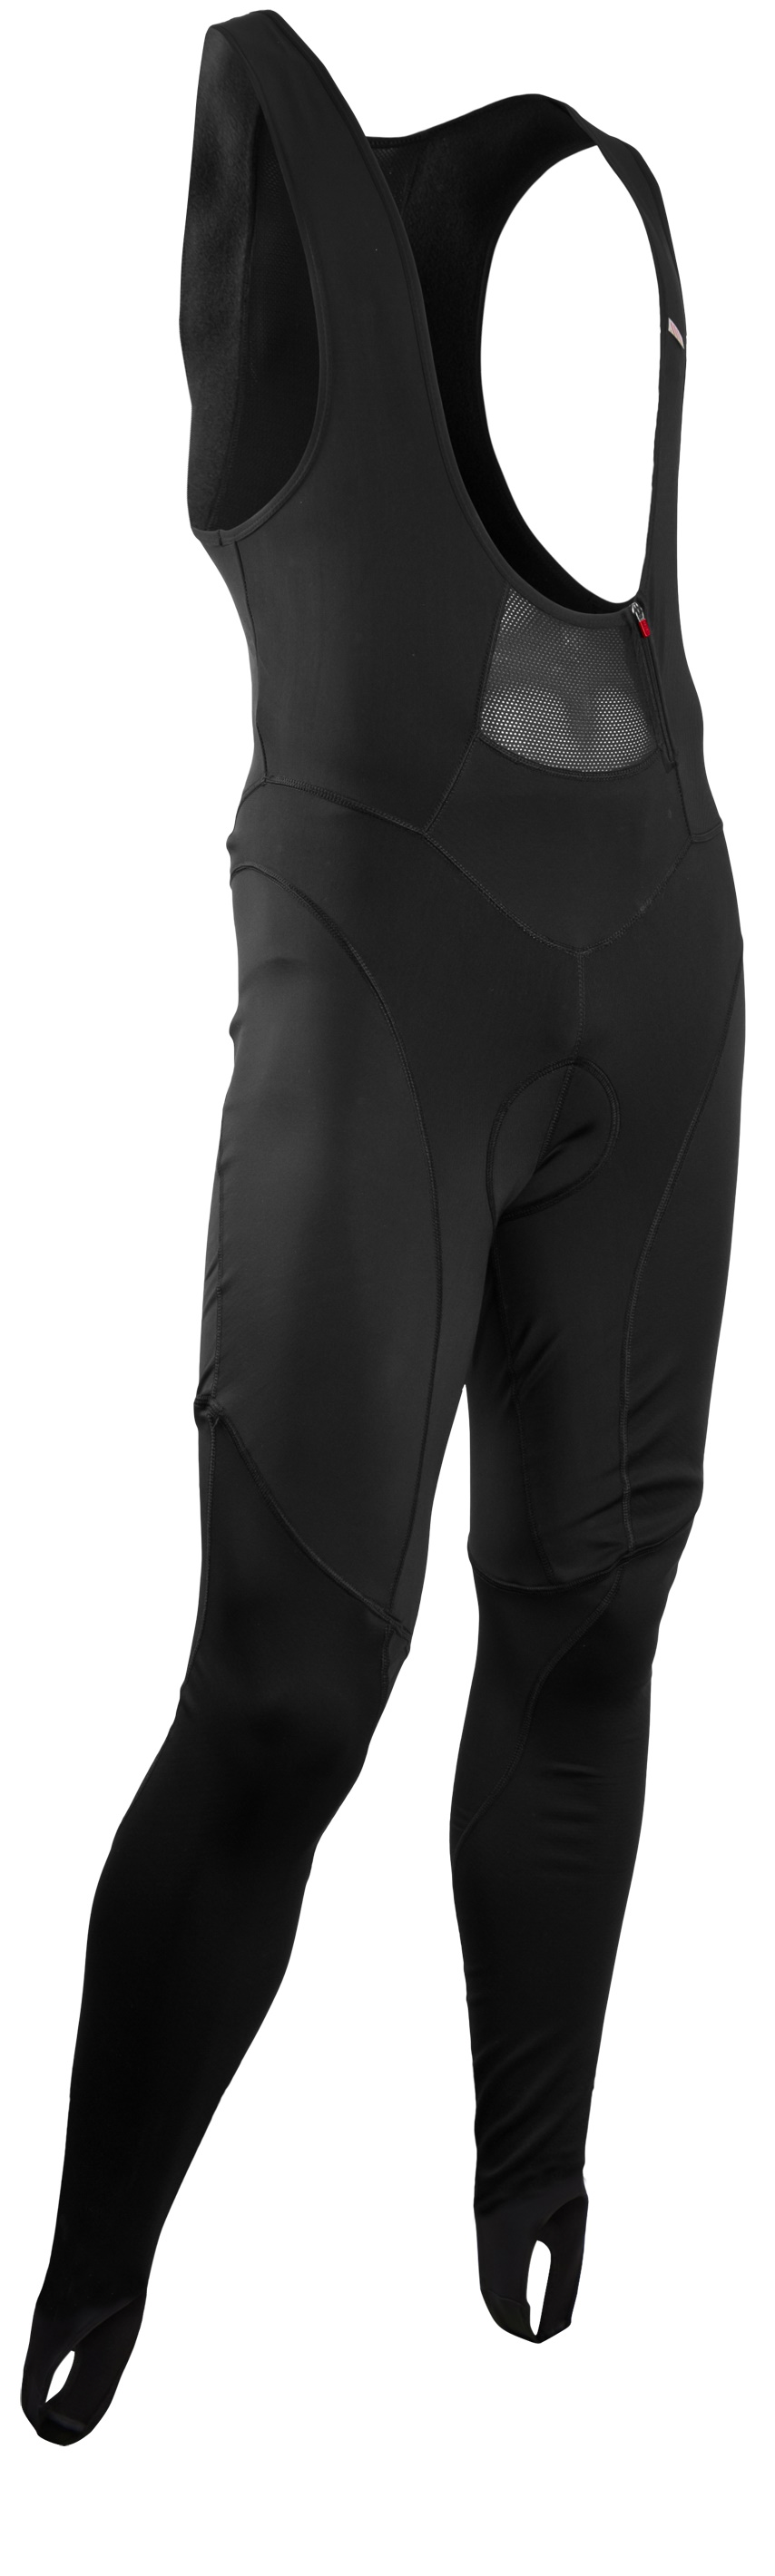 Рейтузы Sugoi RS FIREWALL BIB TIGHT, на лямках, мужские, black (черные), XL фото 